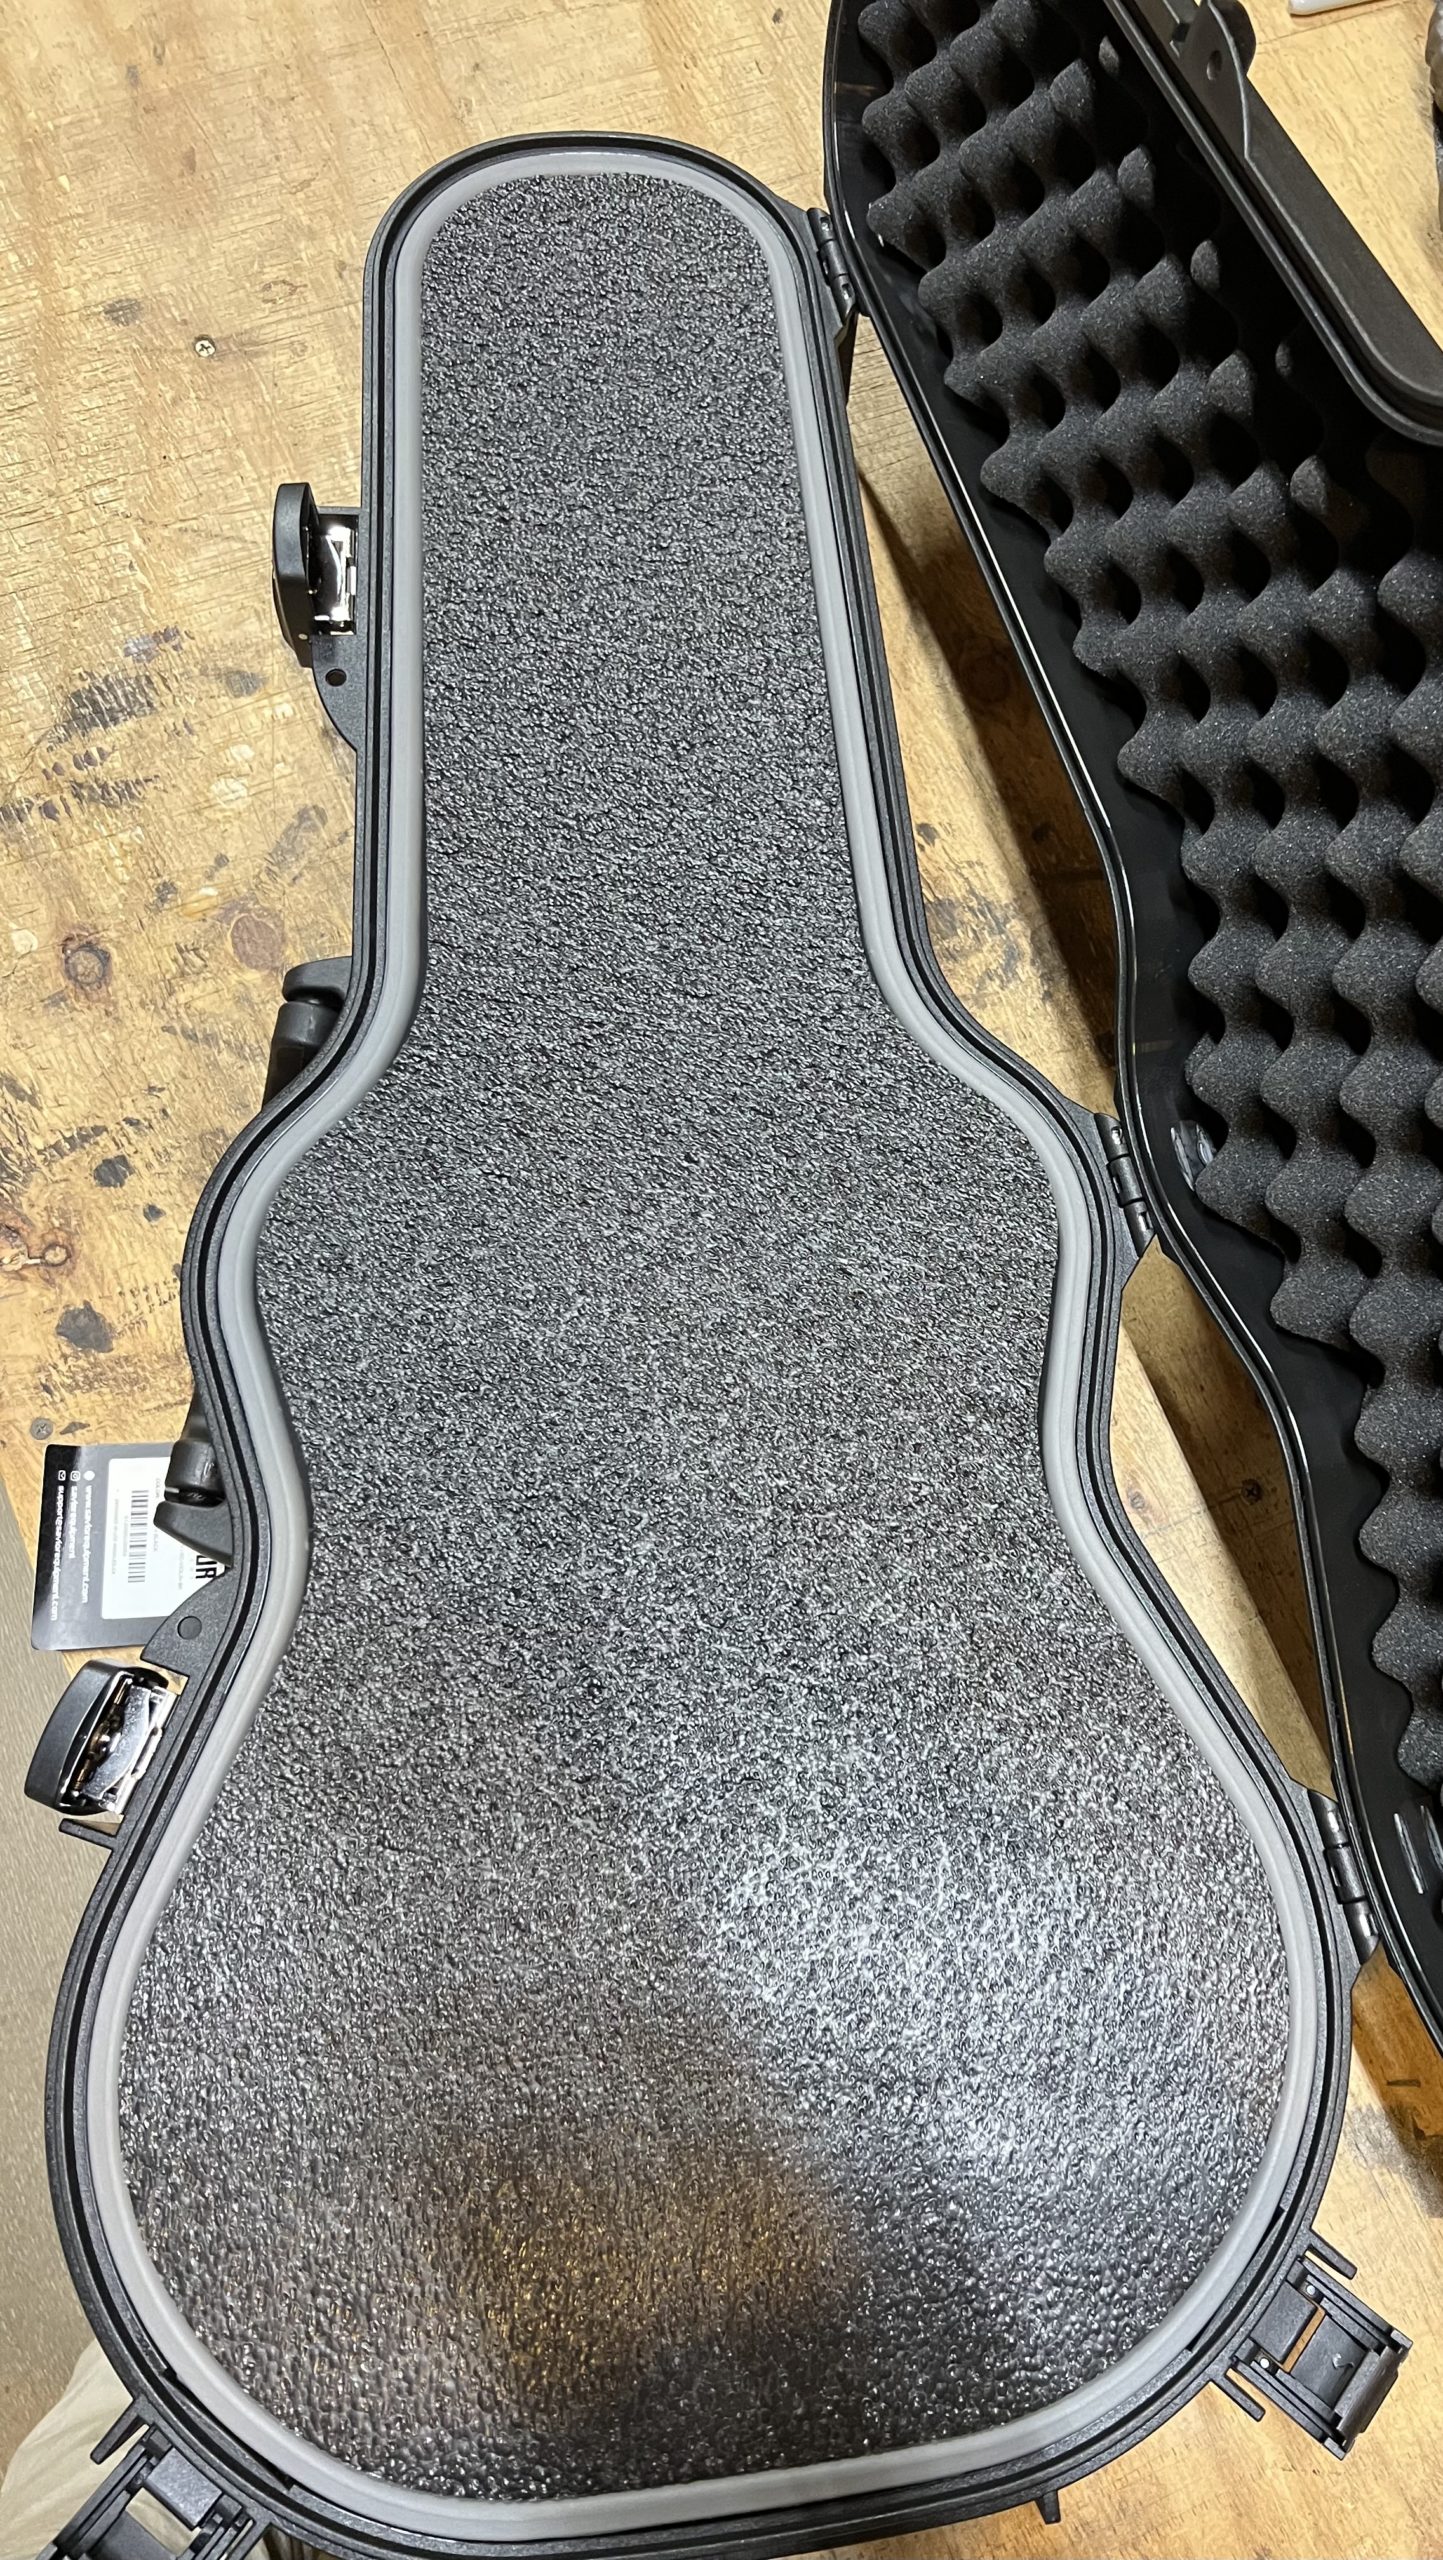 AR15 Semi Custom Foam Kit for Savior Guitar Case